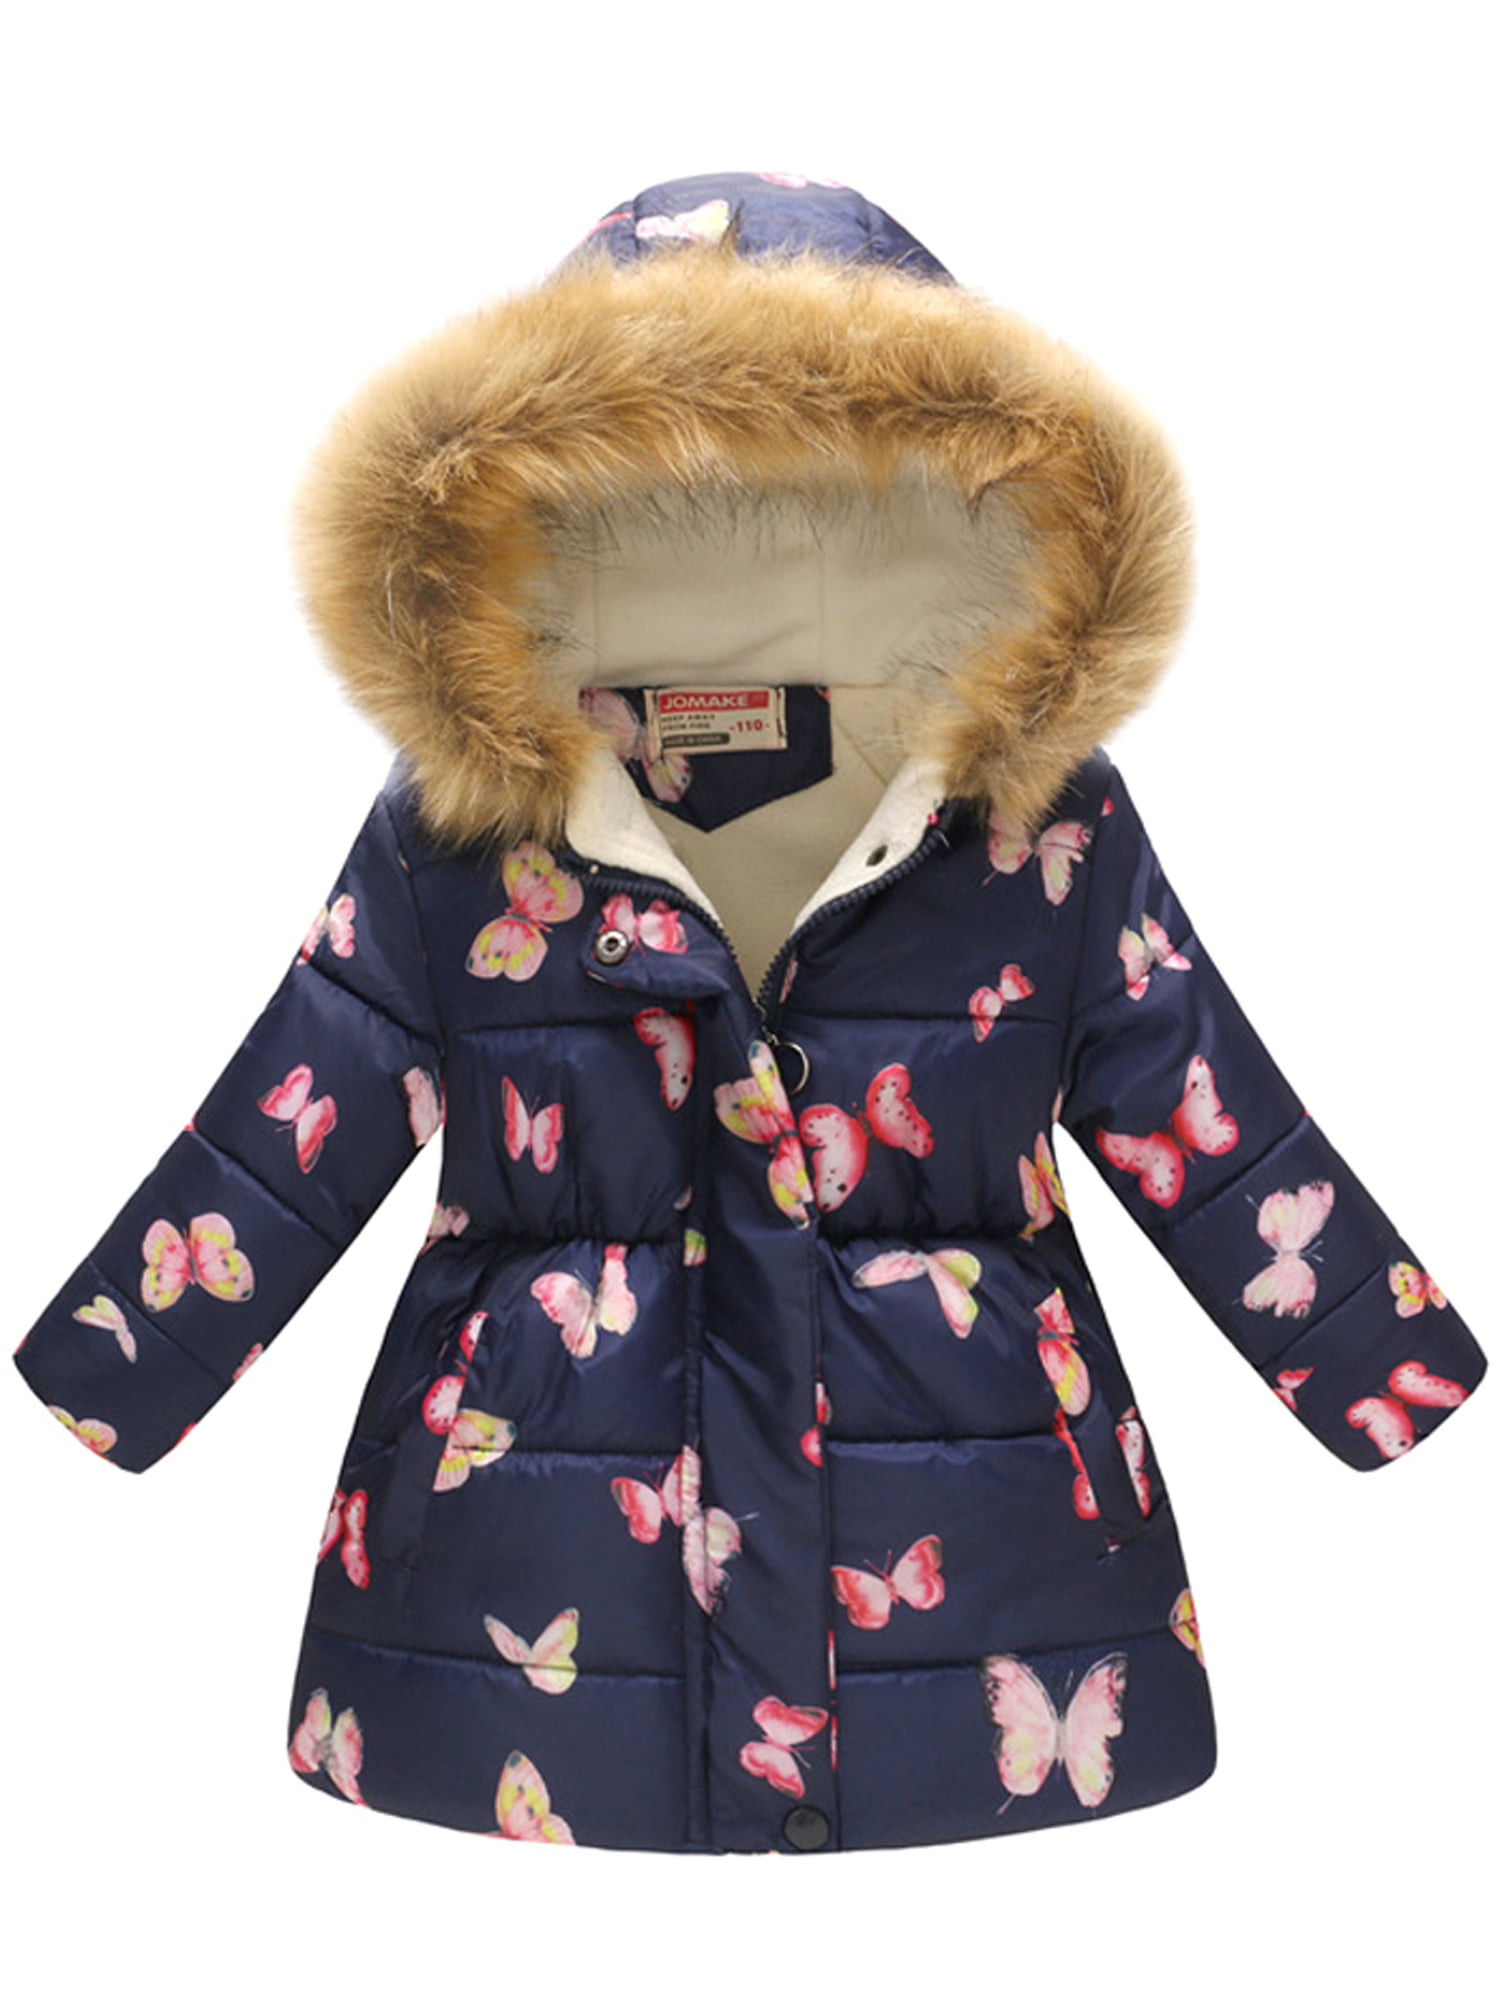 HuTuHu Girls Jacket Lightweight Warm Lovely Colorful Outerwear Kids Winter Coat 